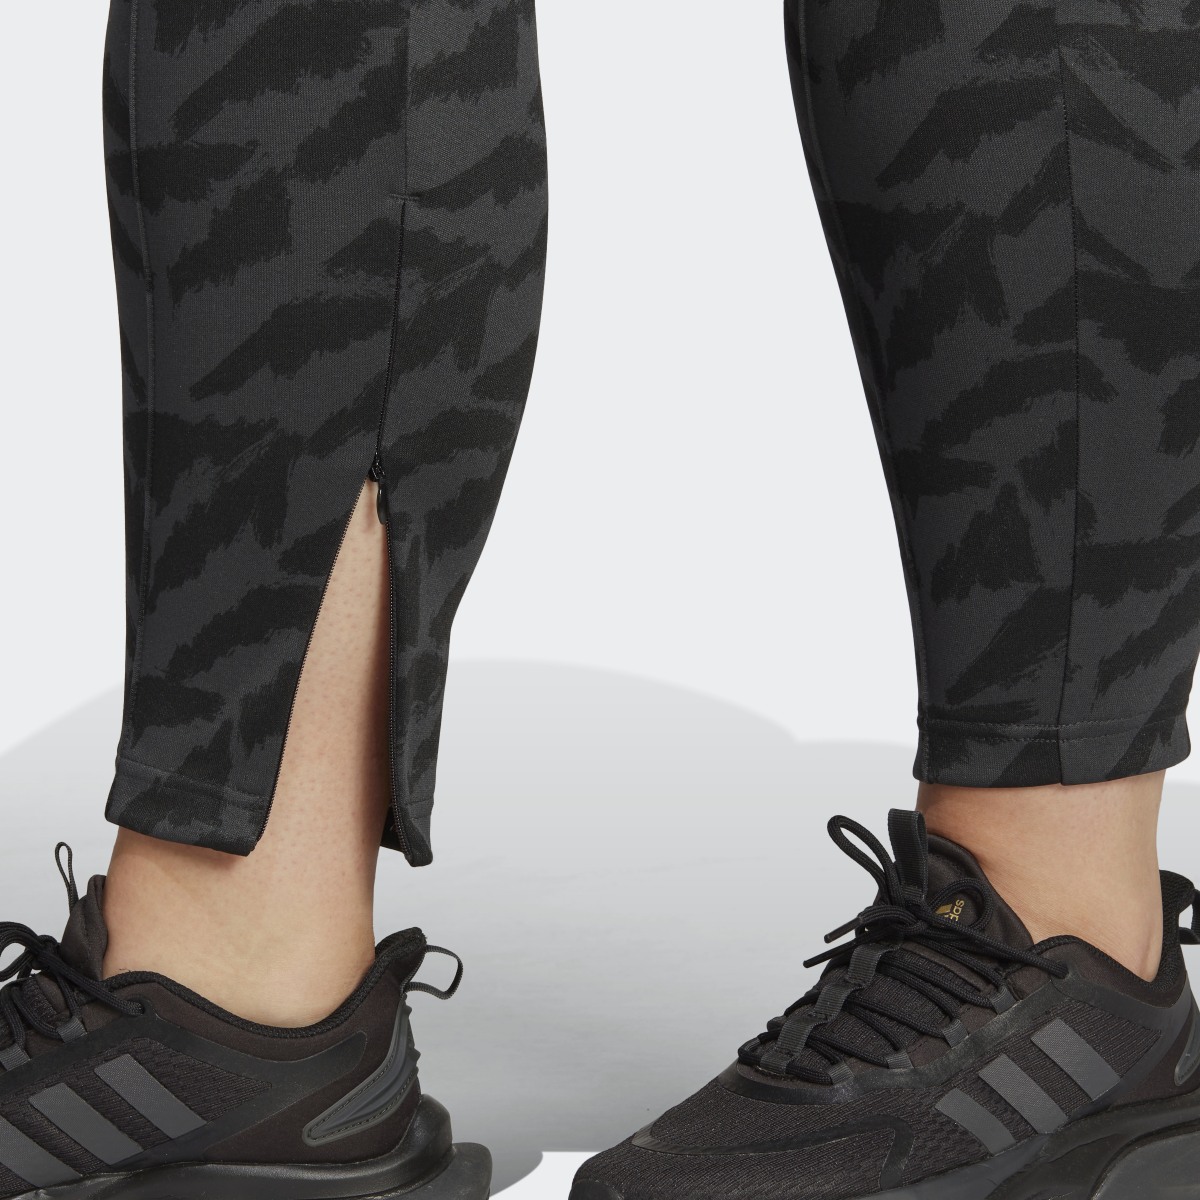 Adidas Tiro Suit Up Lifestyle Trainingshose – Große Größen. 6